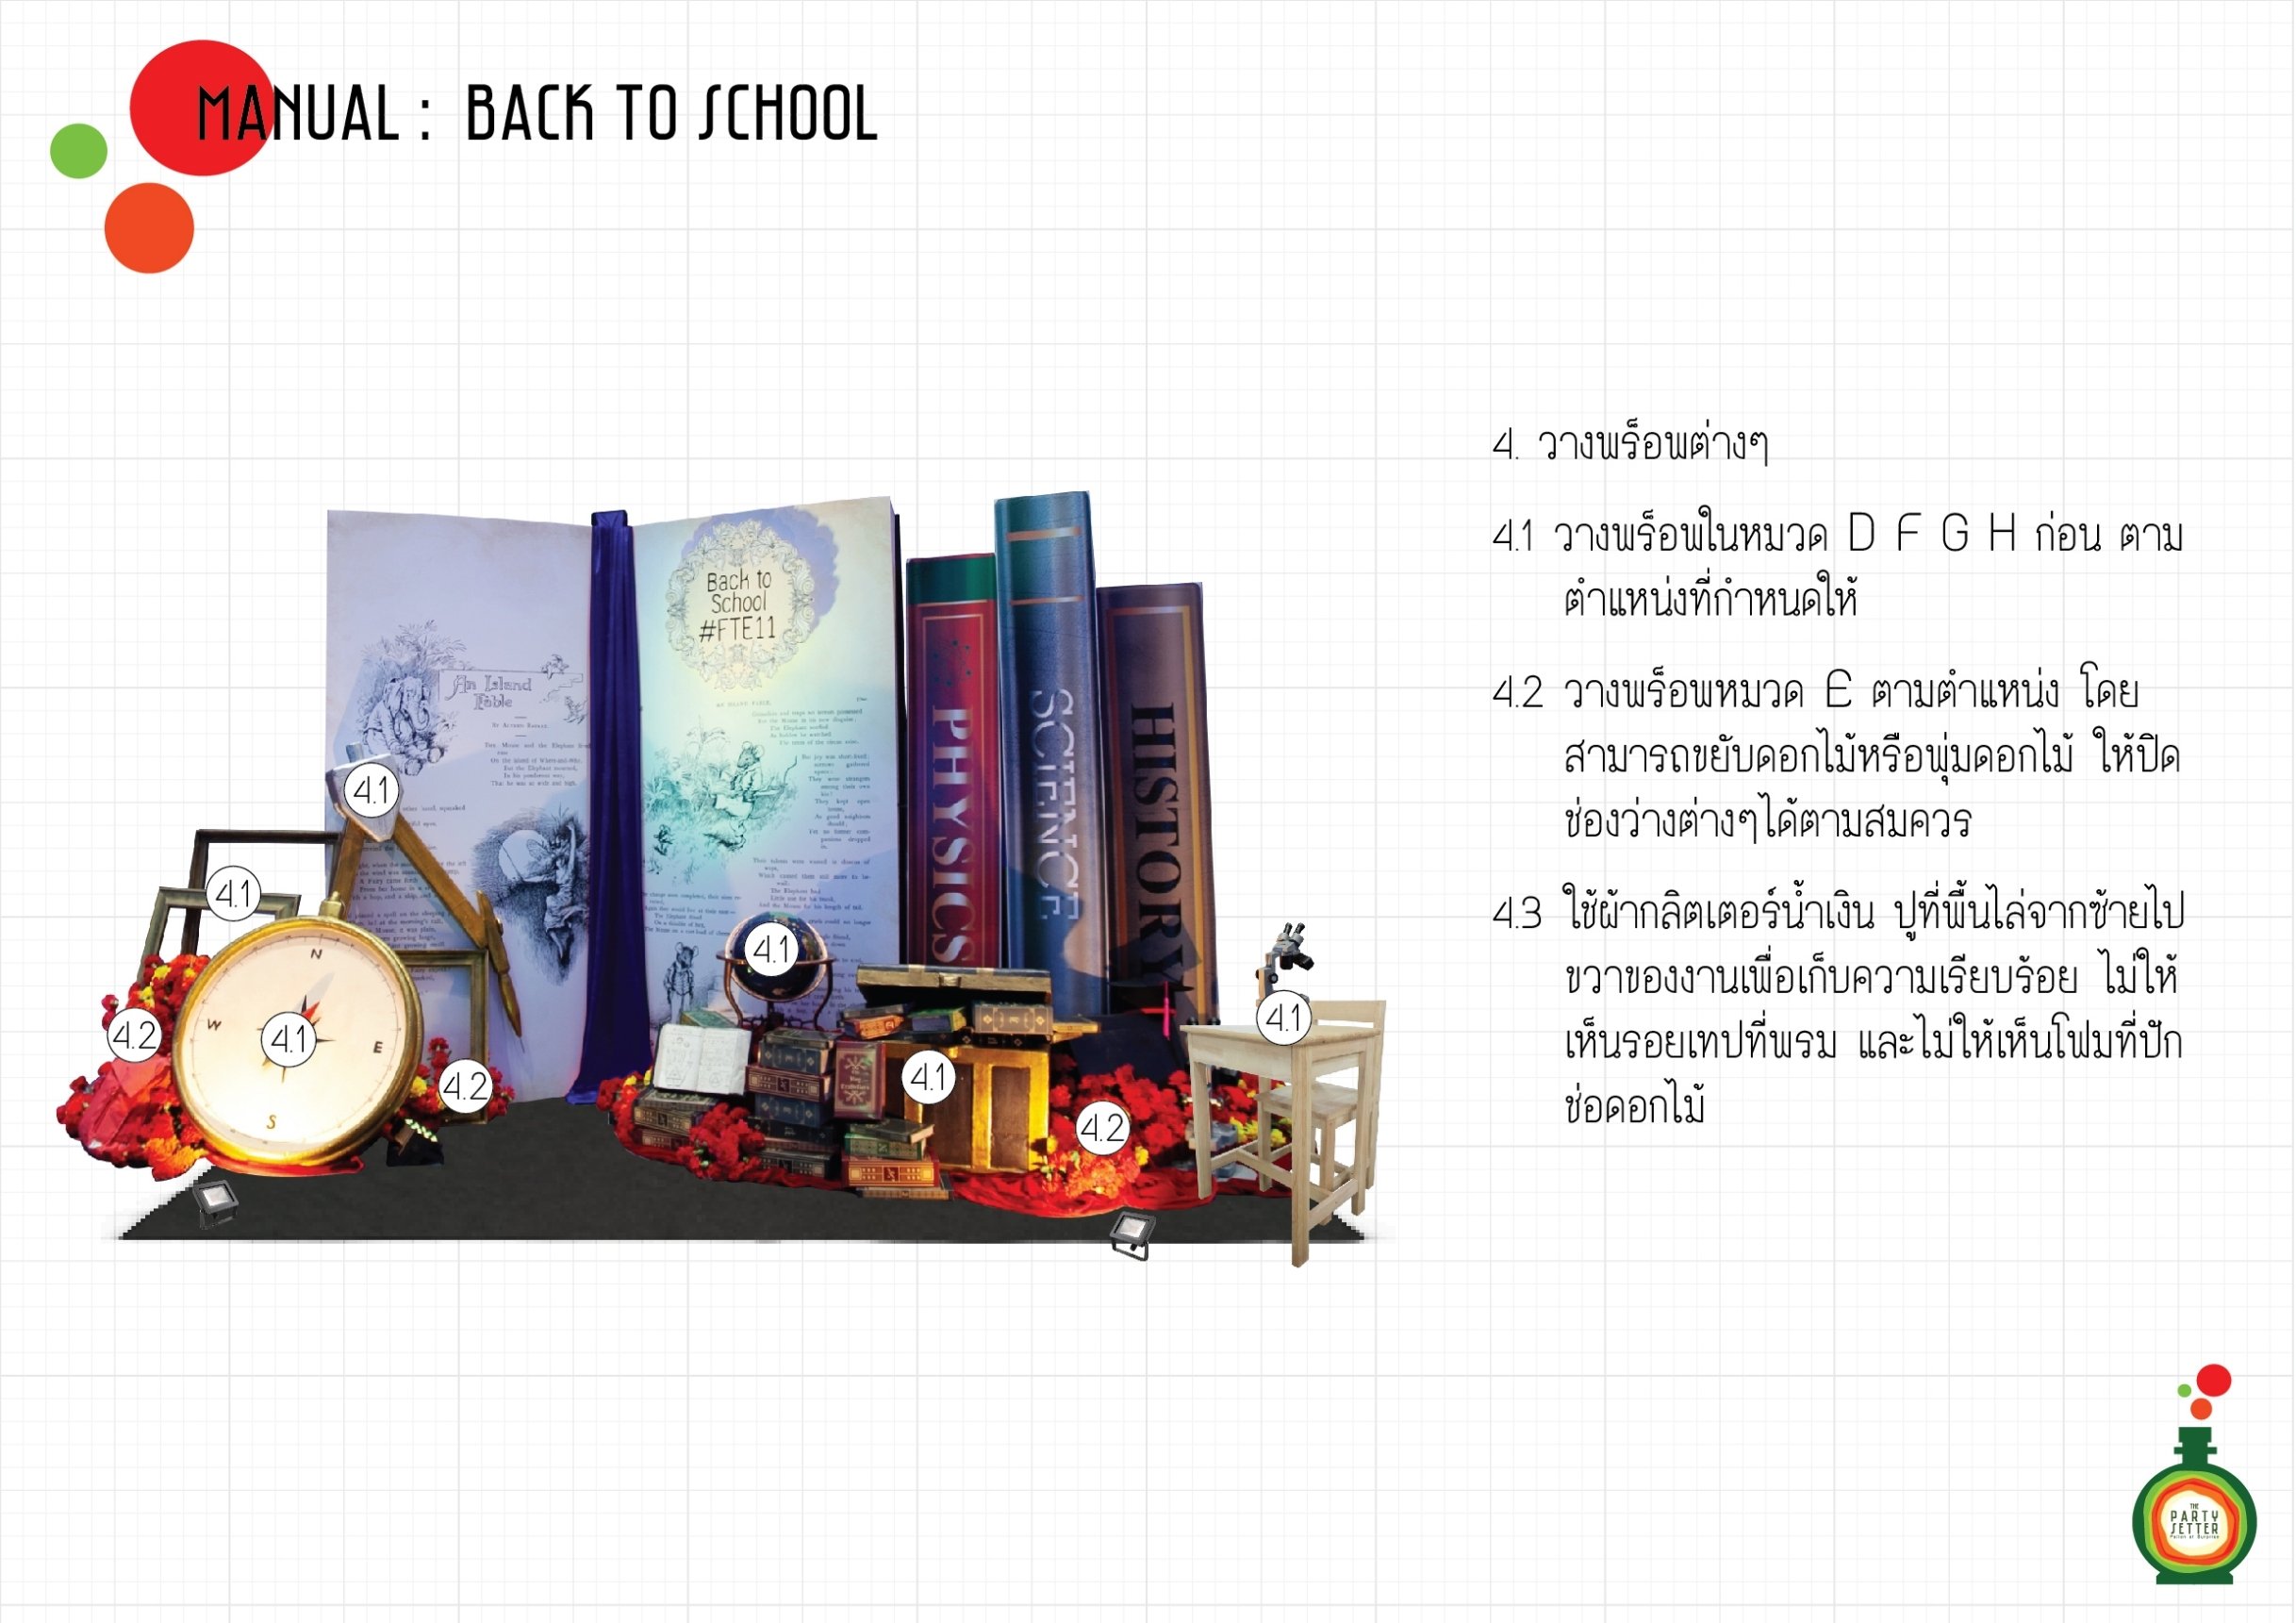 Manual_Back to School_04-01.jpg